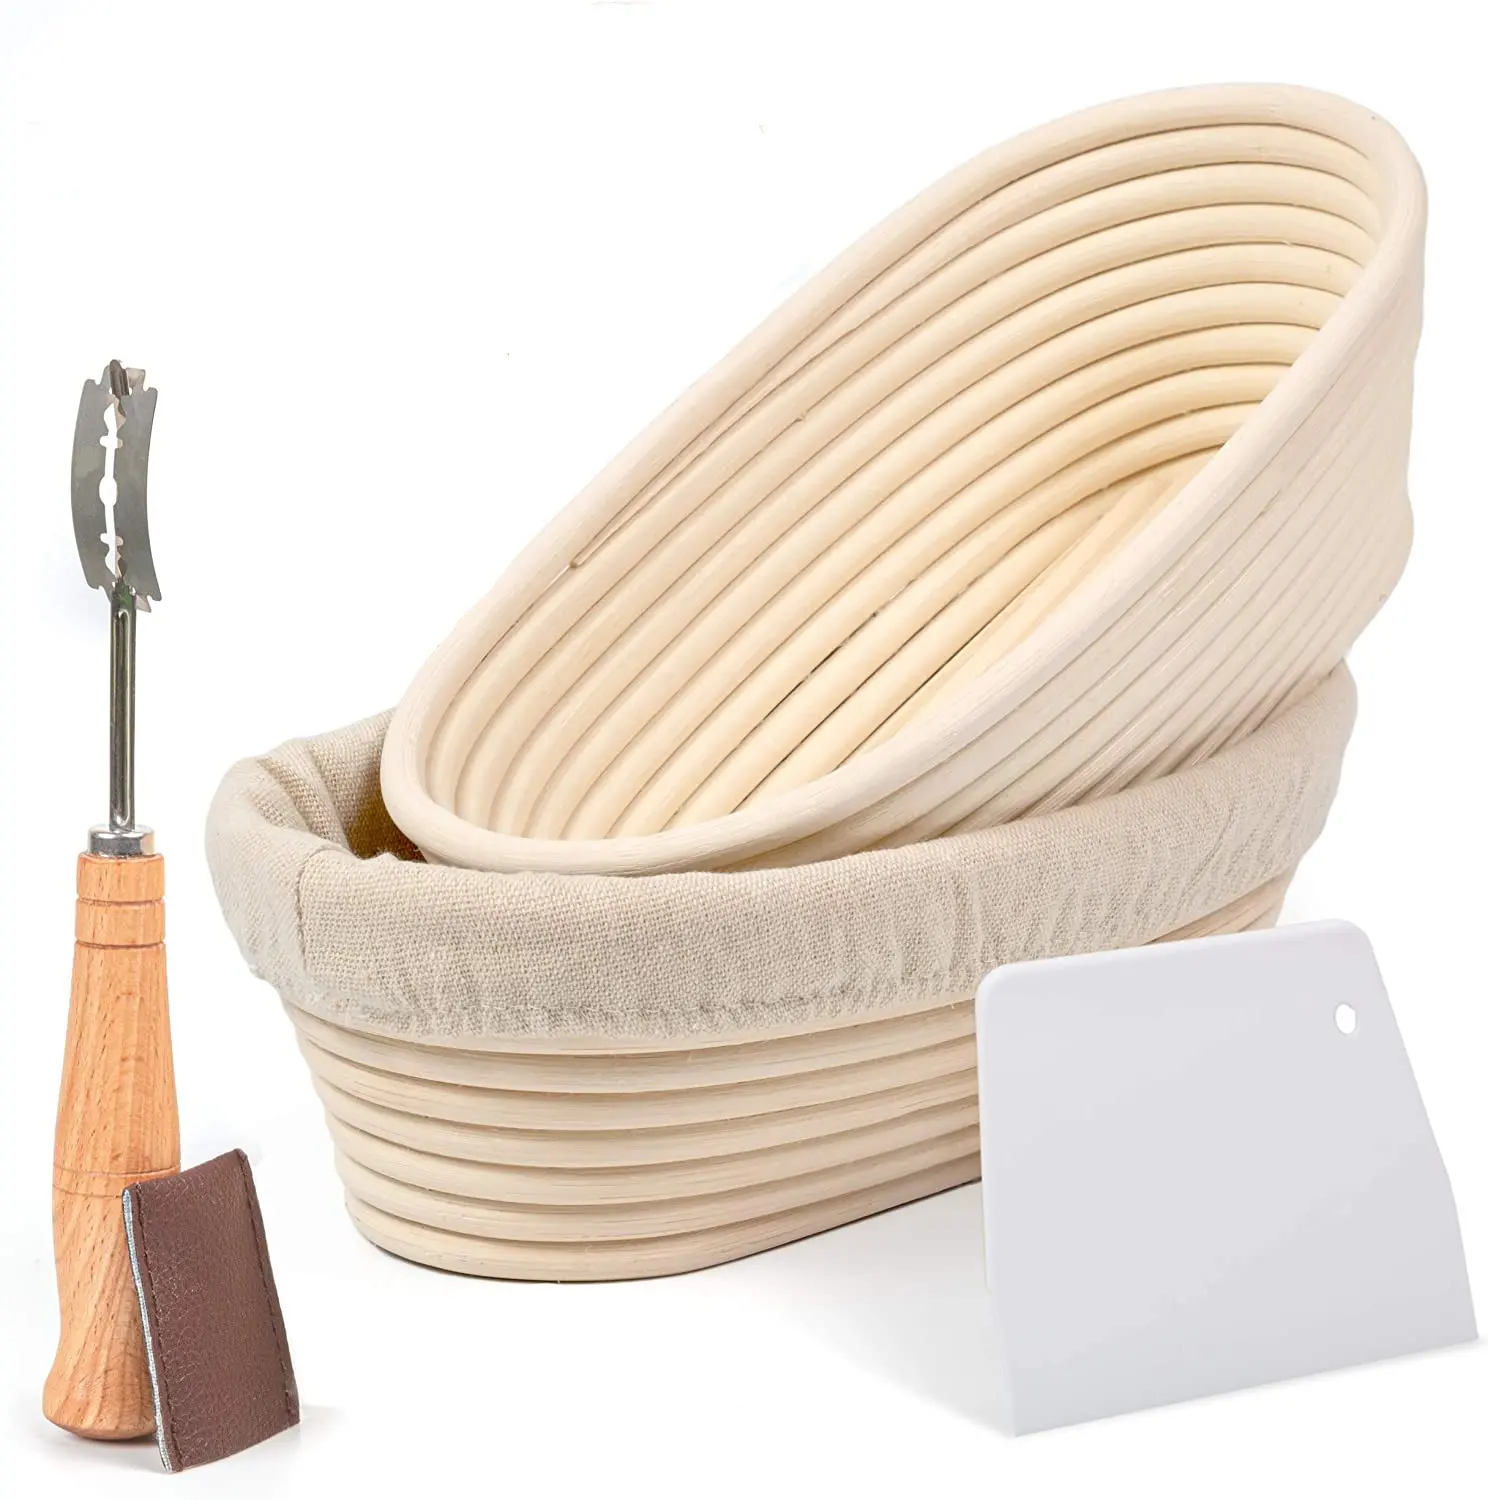 100% Nature Rattan Brotform Oval Shaped Dough Proofing Bowls Home Sourdough Bread Baking Artisan Bread Proofing Basket Set